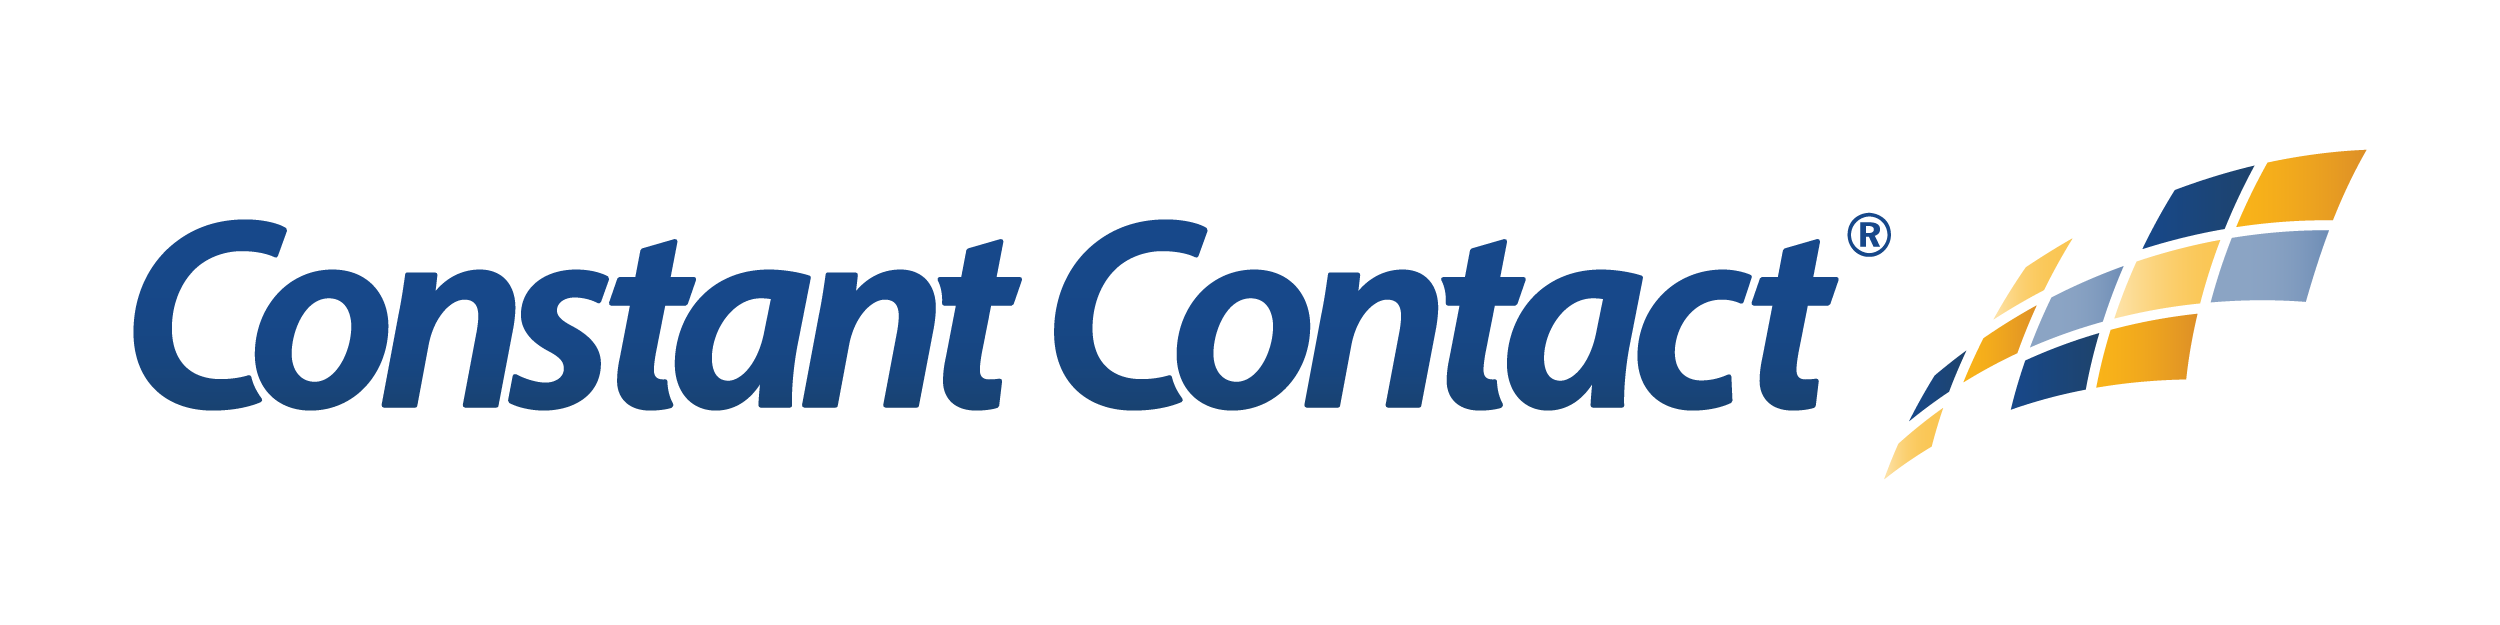 constant-contact-logo-horiz-color-300dpi